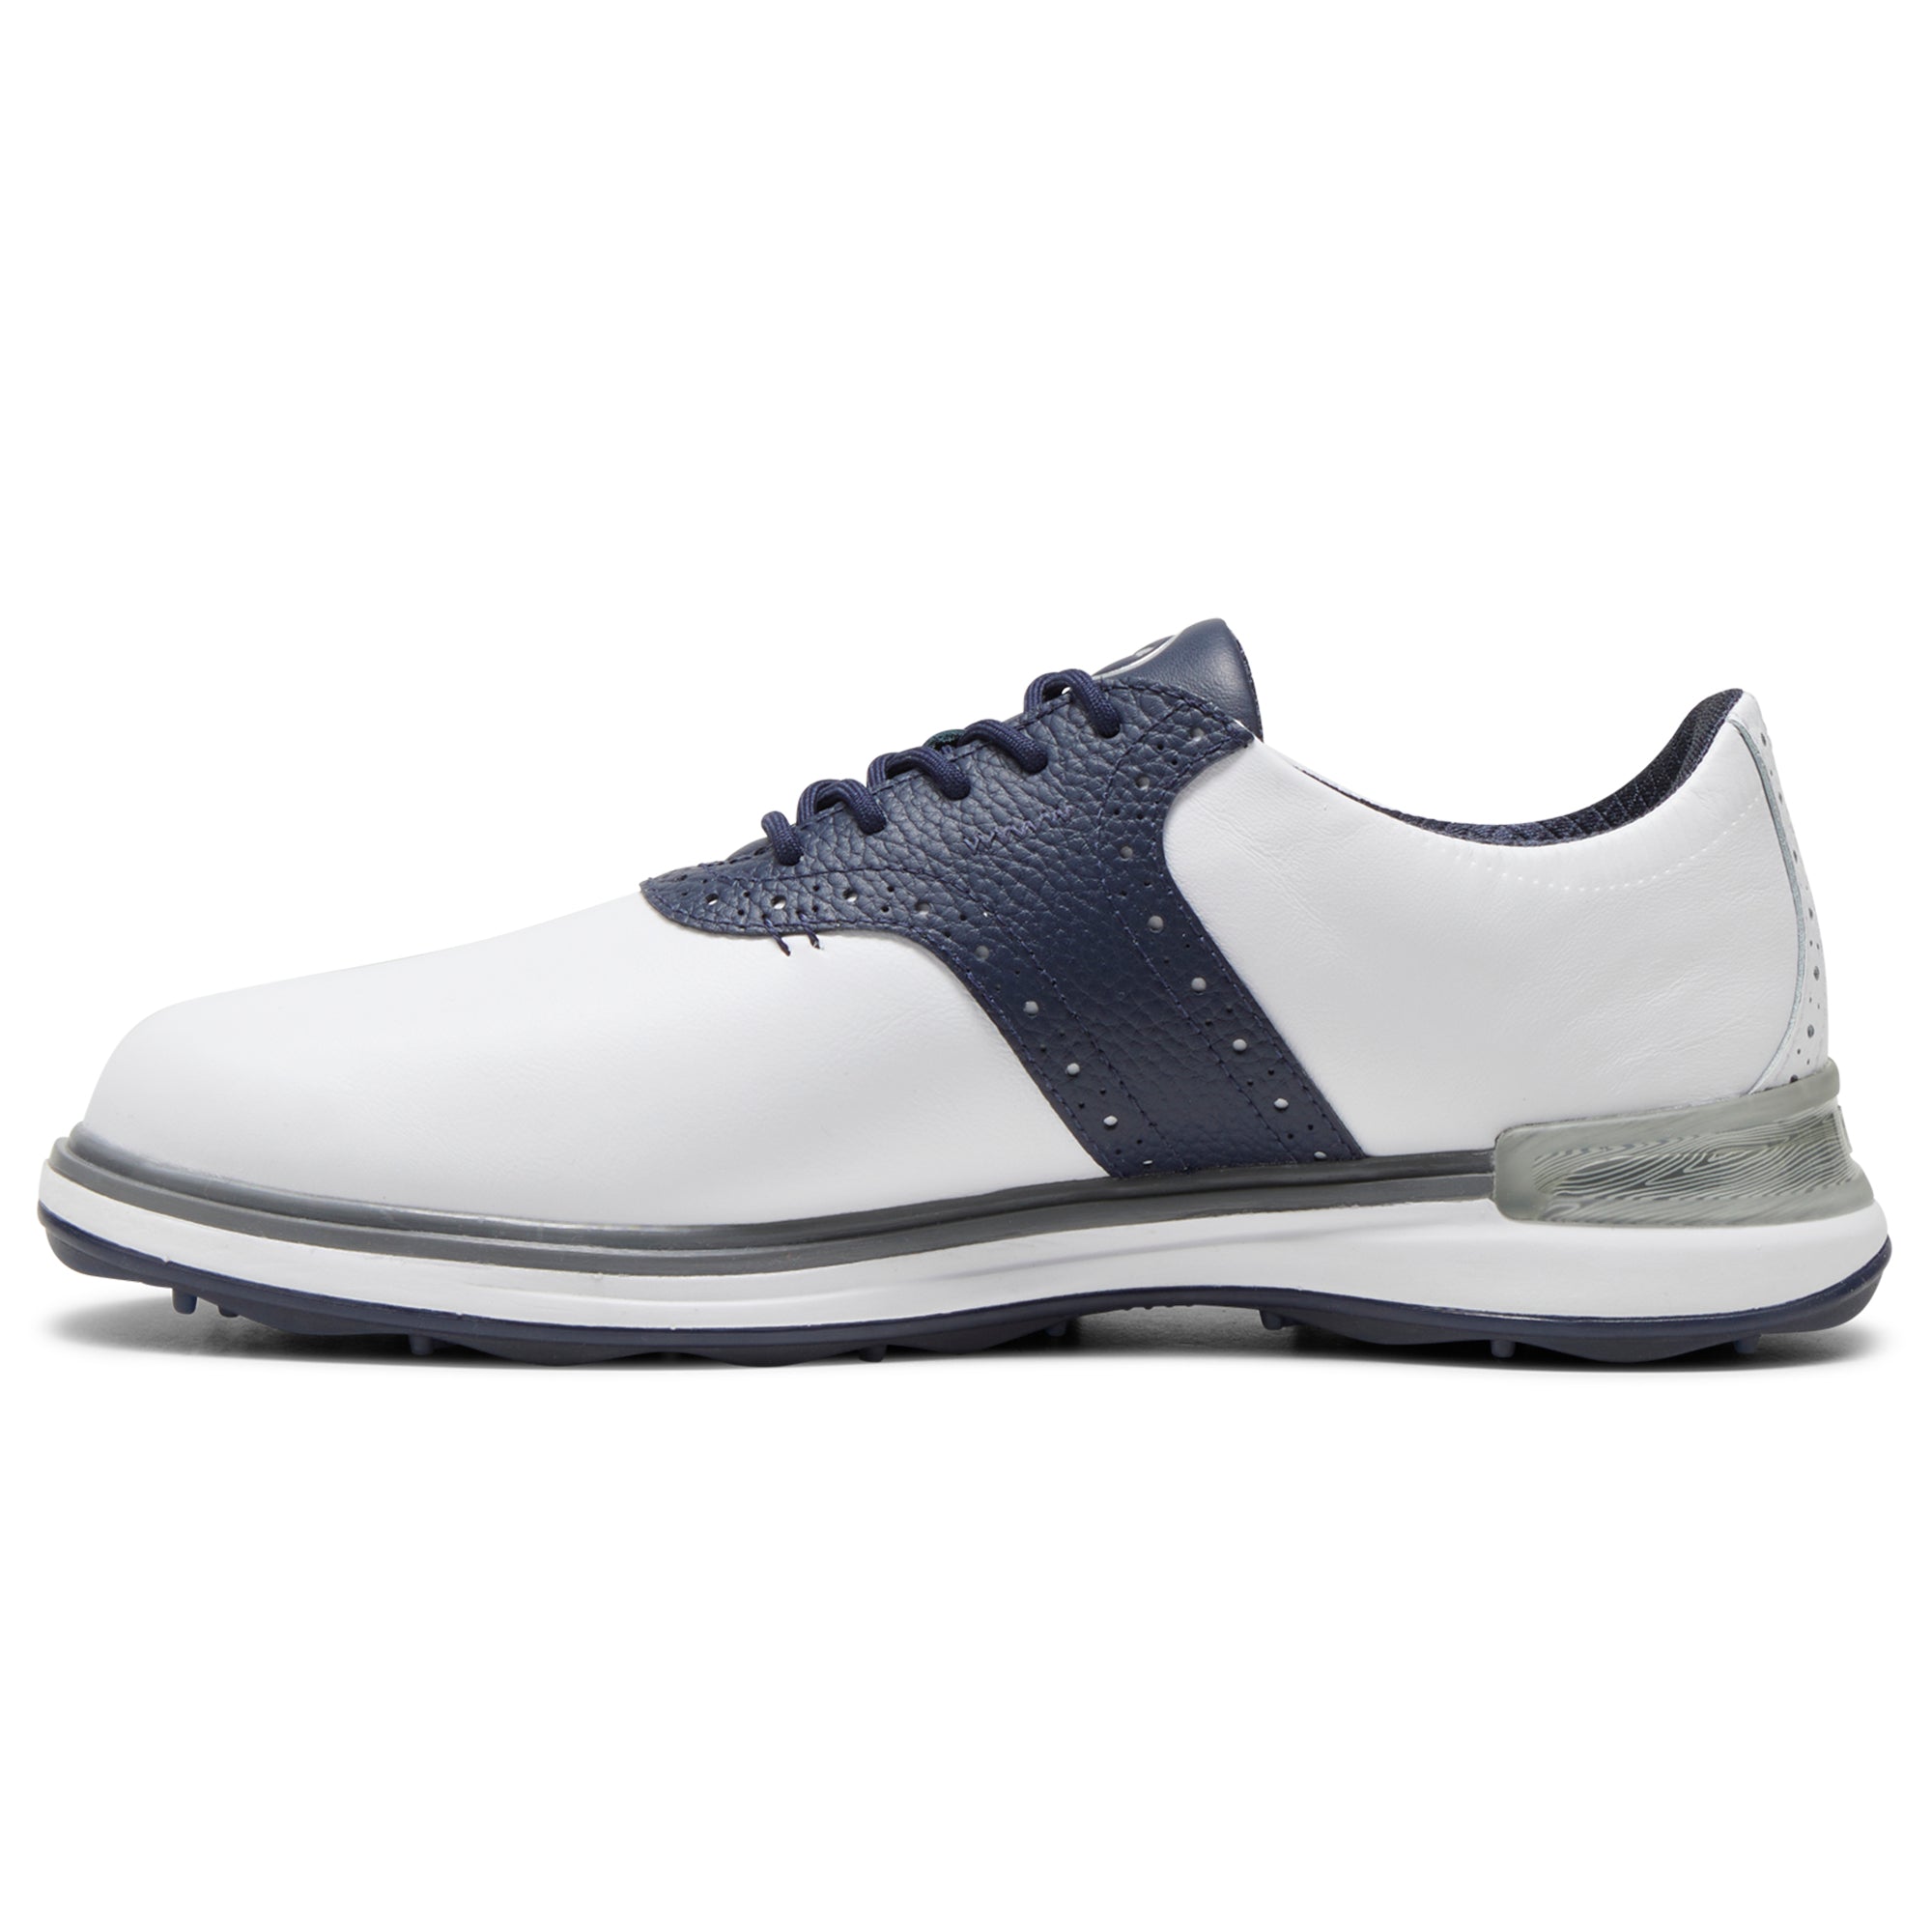 puma-avant-golf-shoes-379428-puma-white-deep-navy-speed-blue-05